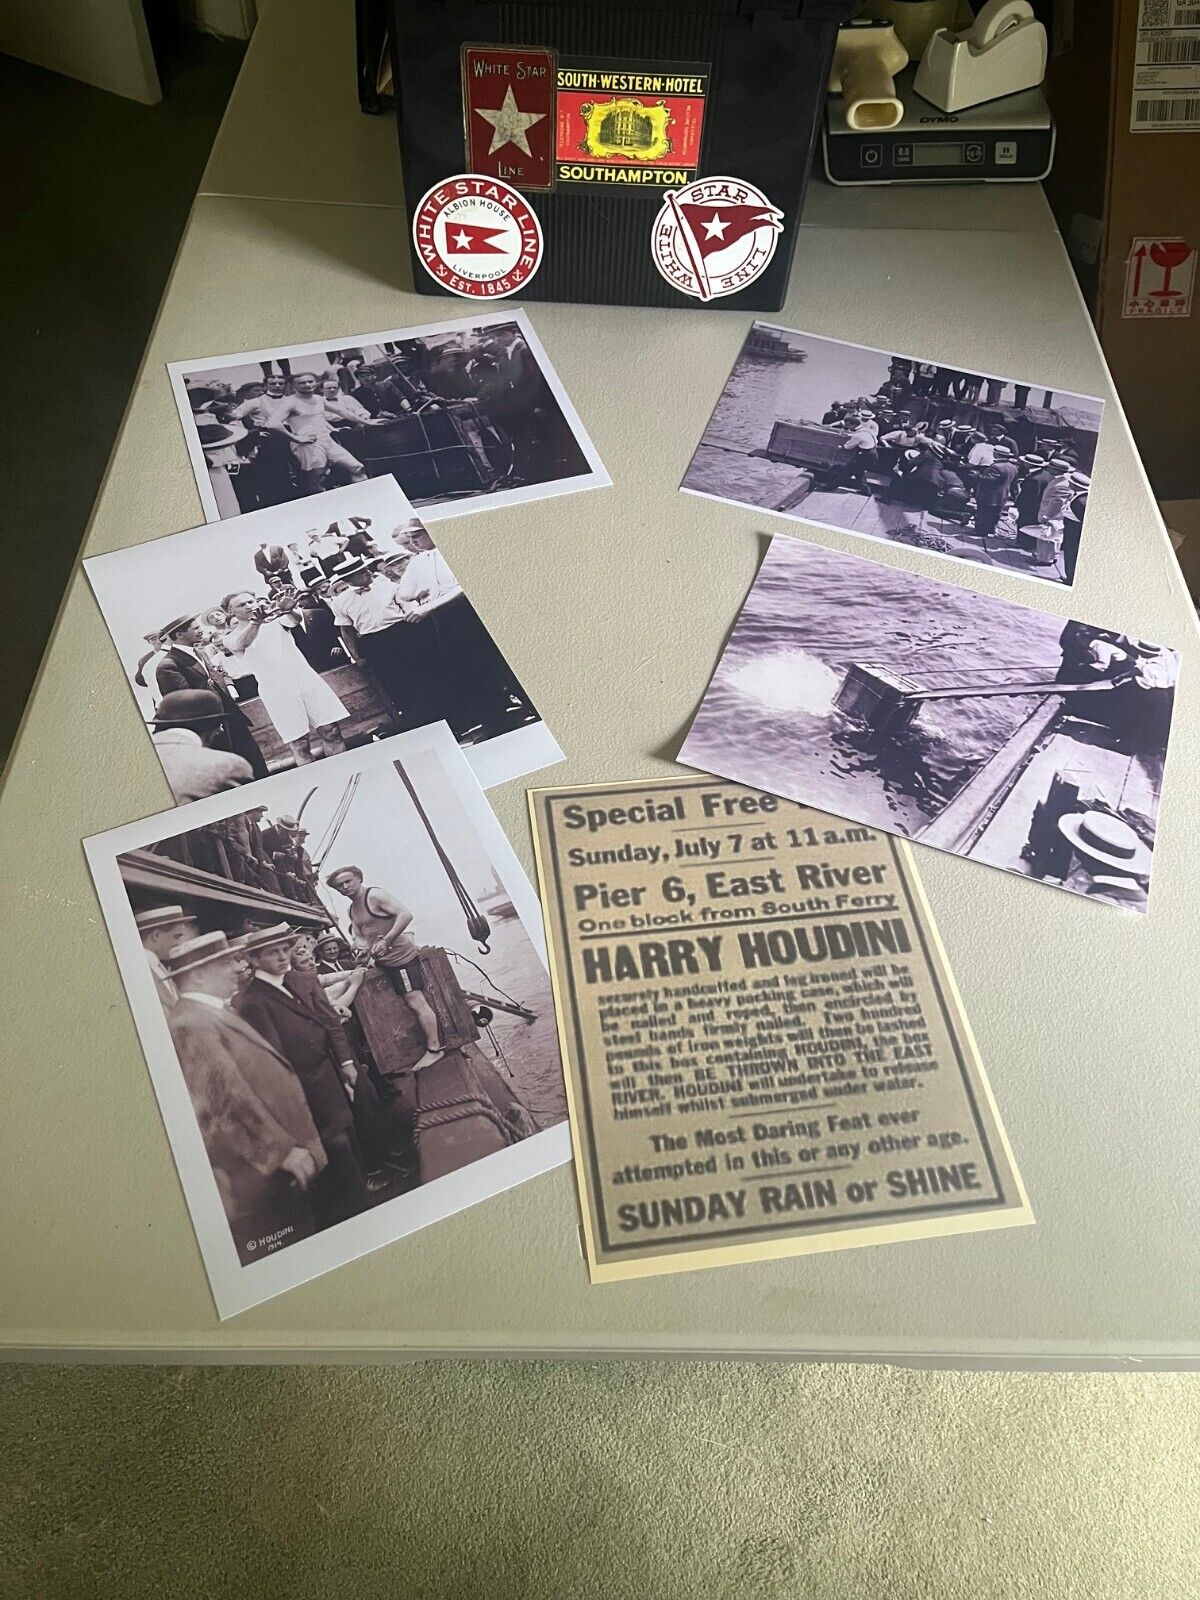 Harry Houdini Reprint Set, The East River Box Escape Set of 10 images plus BONUS